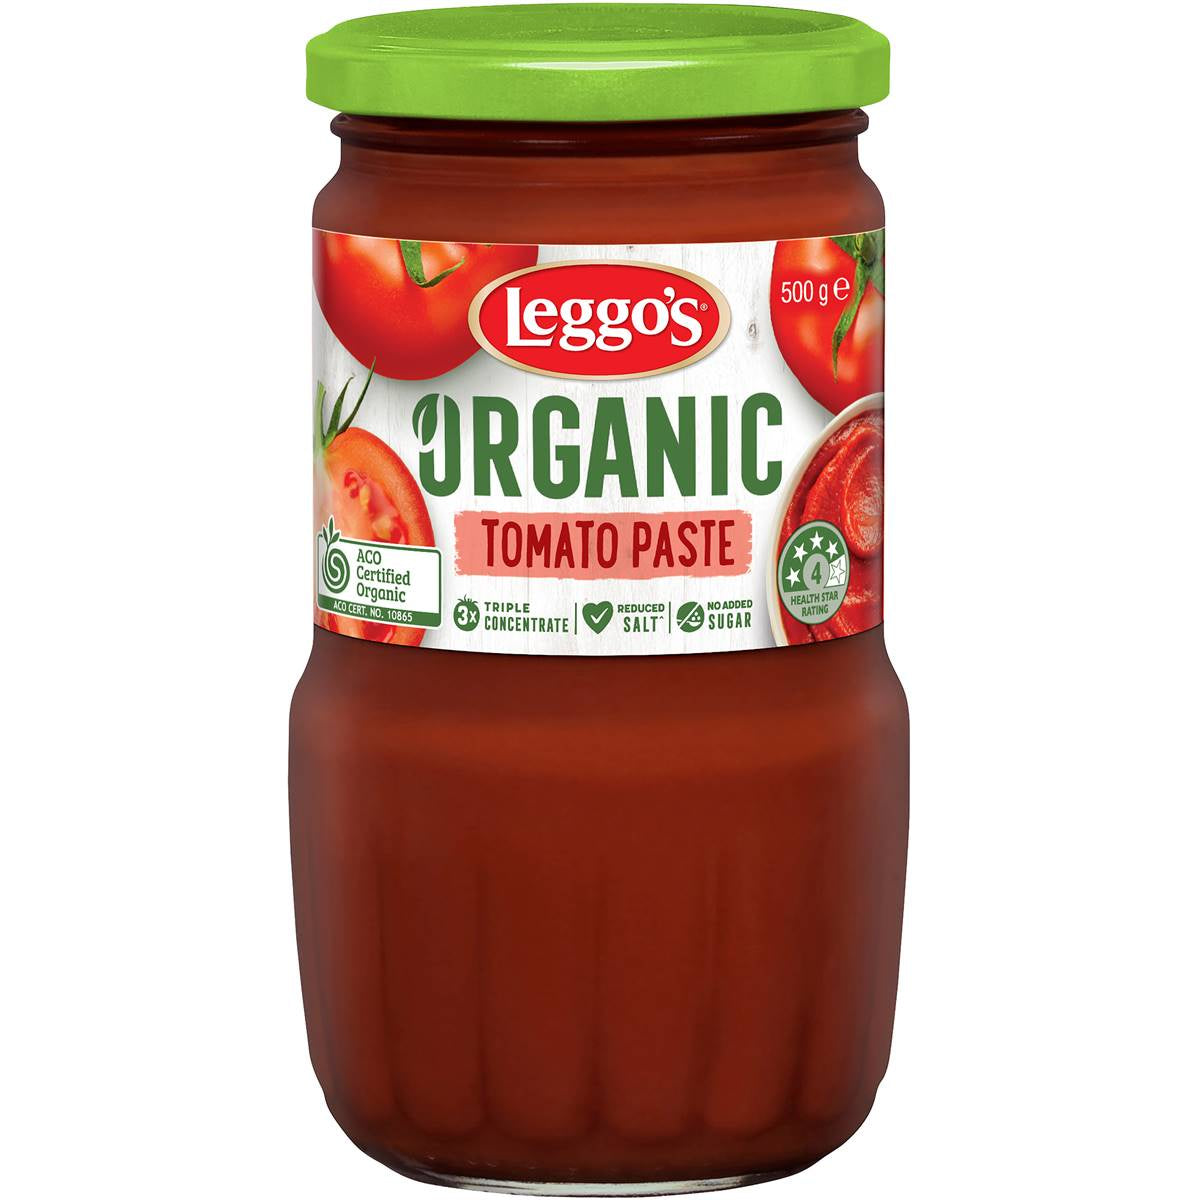 Leggo's Organic Tomato Paste 500g